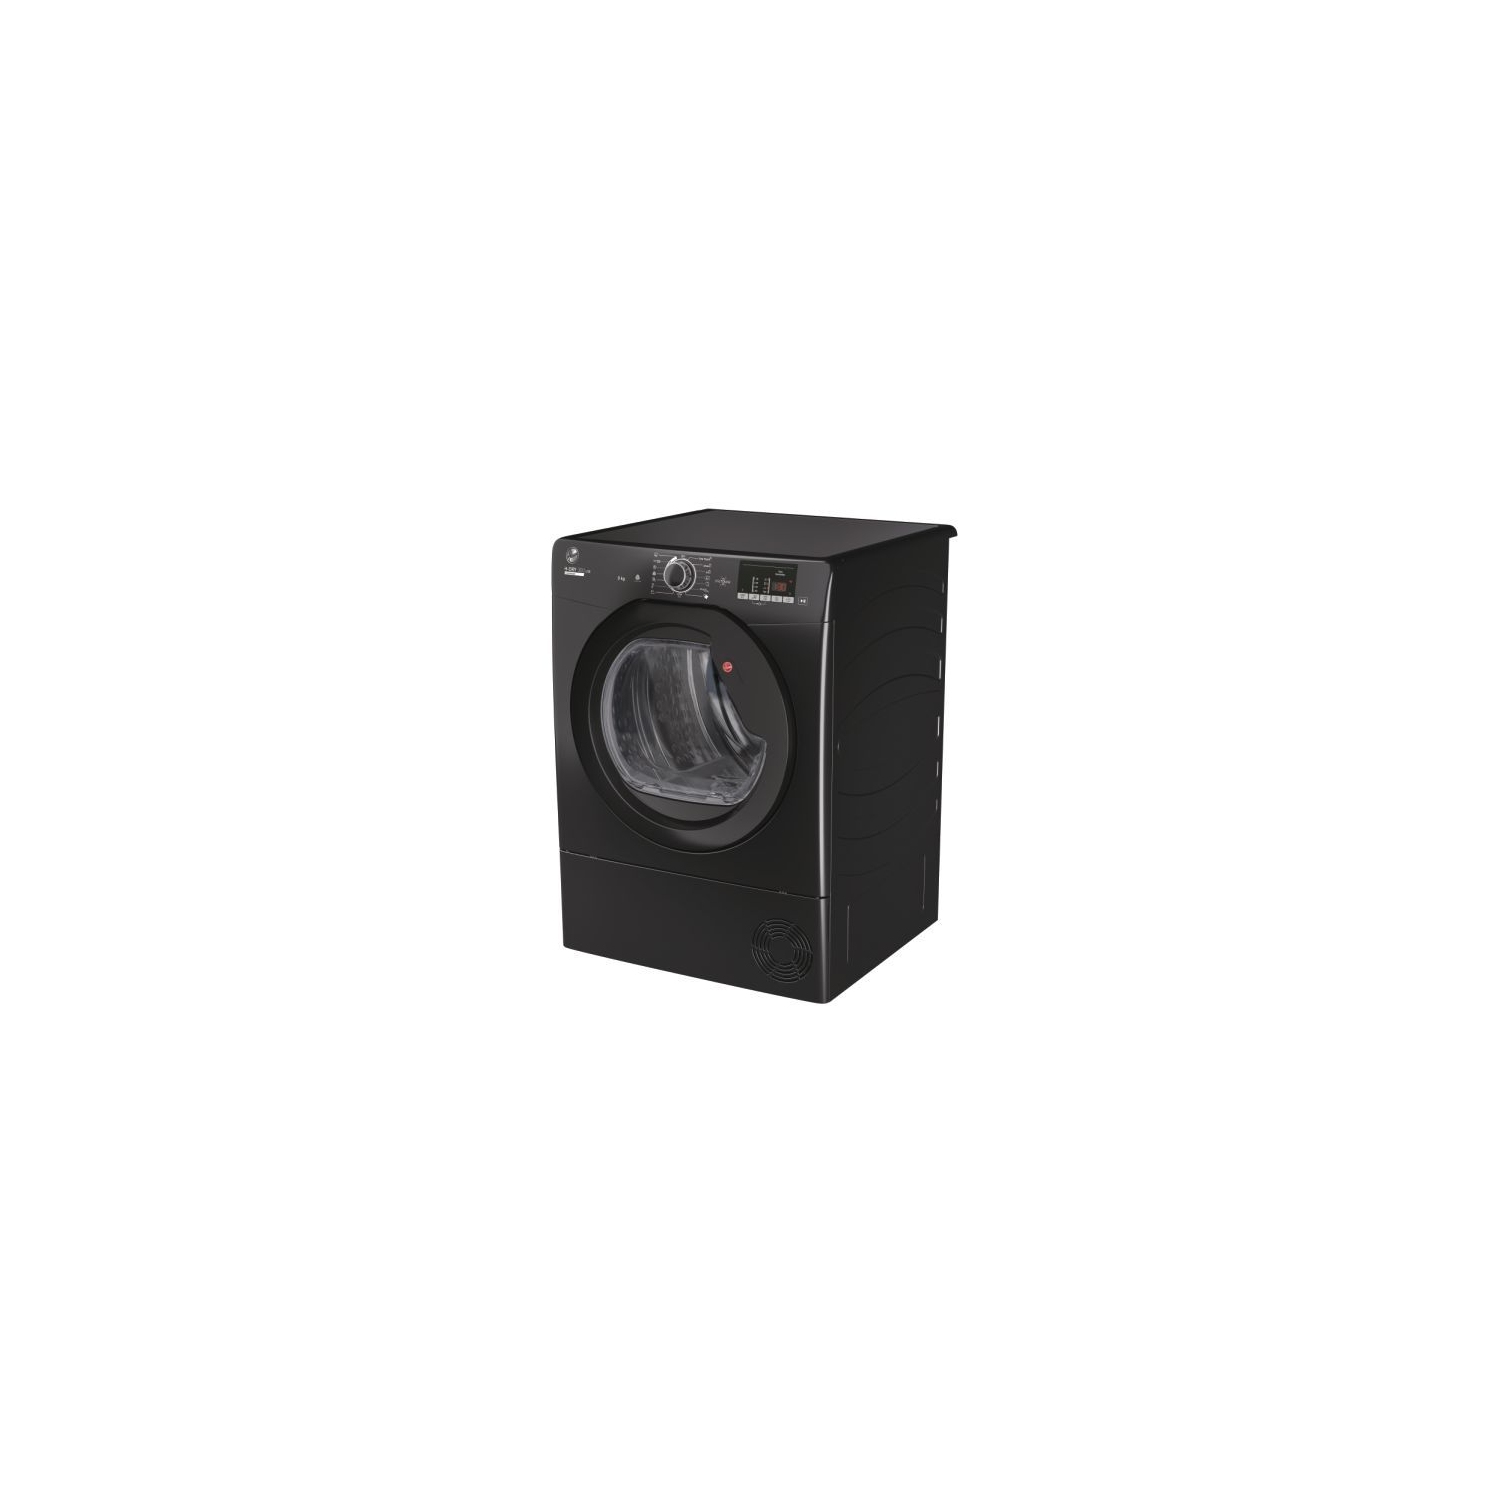 HOOVER H-Dry 300 HLE C9DGB NFC 9 kg Condenser Tumble Dryer - Black - 1